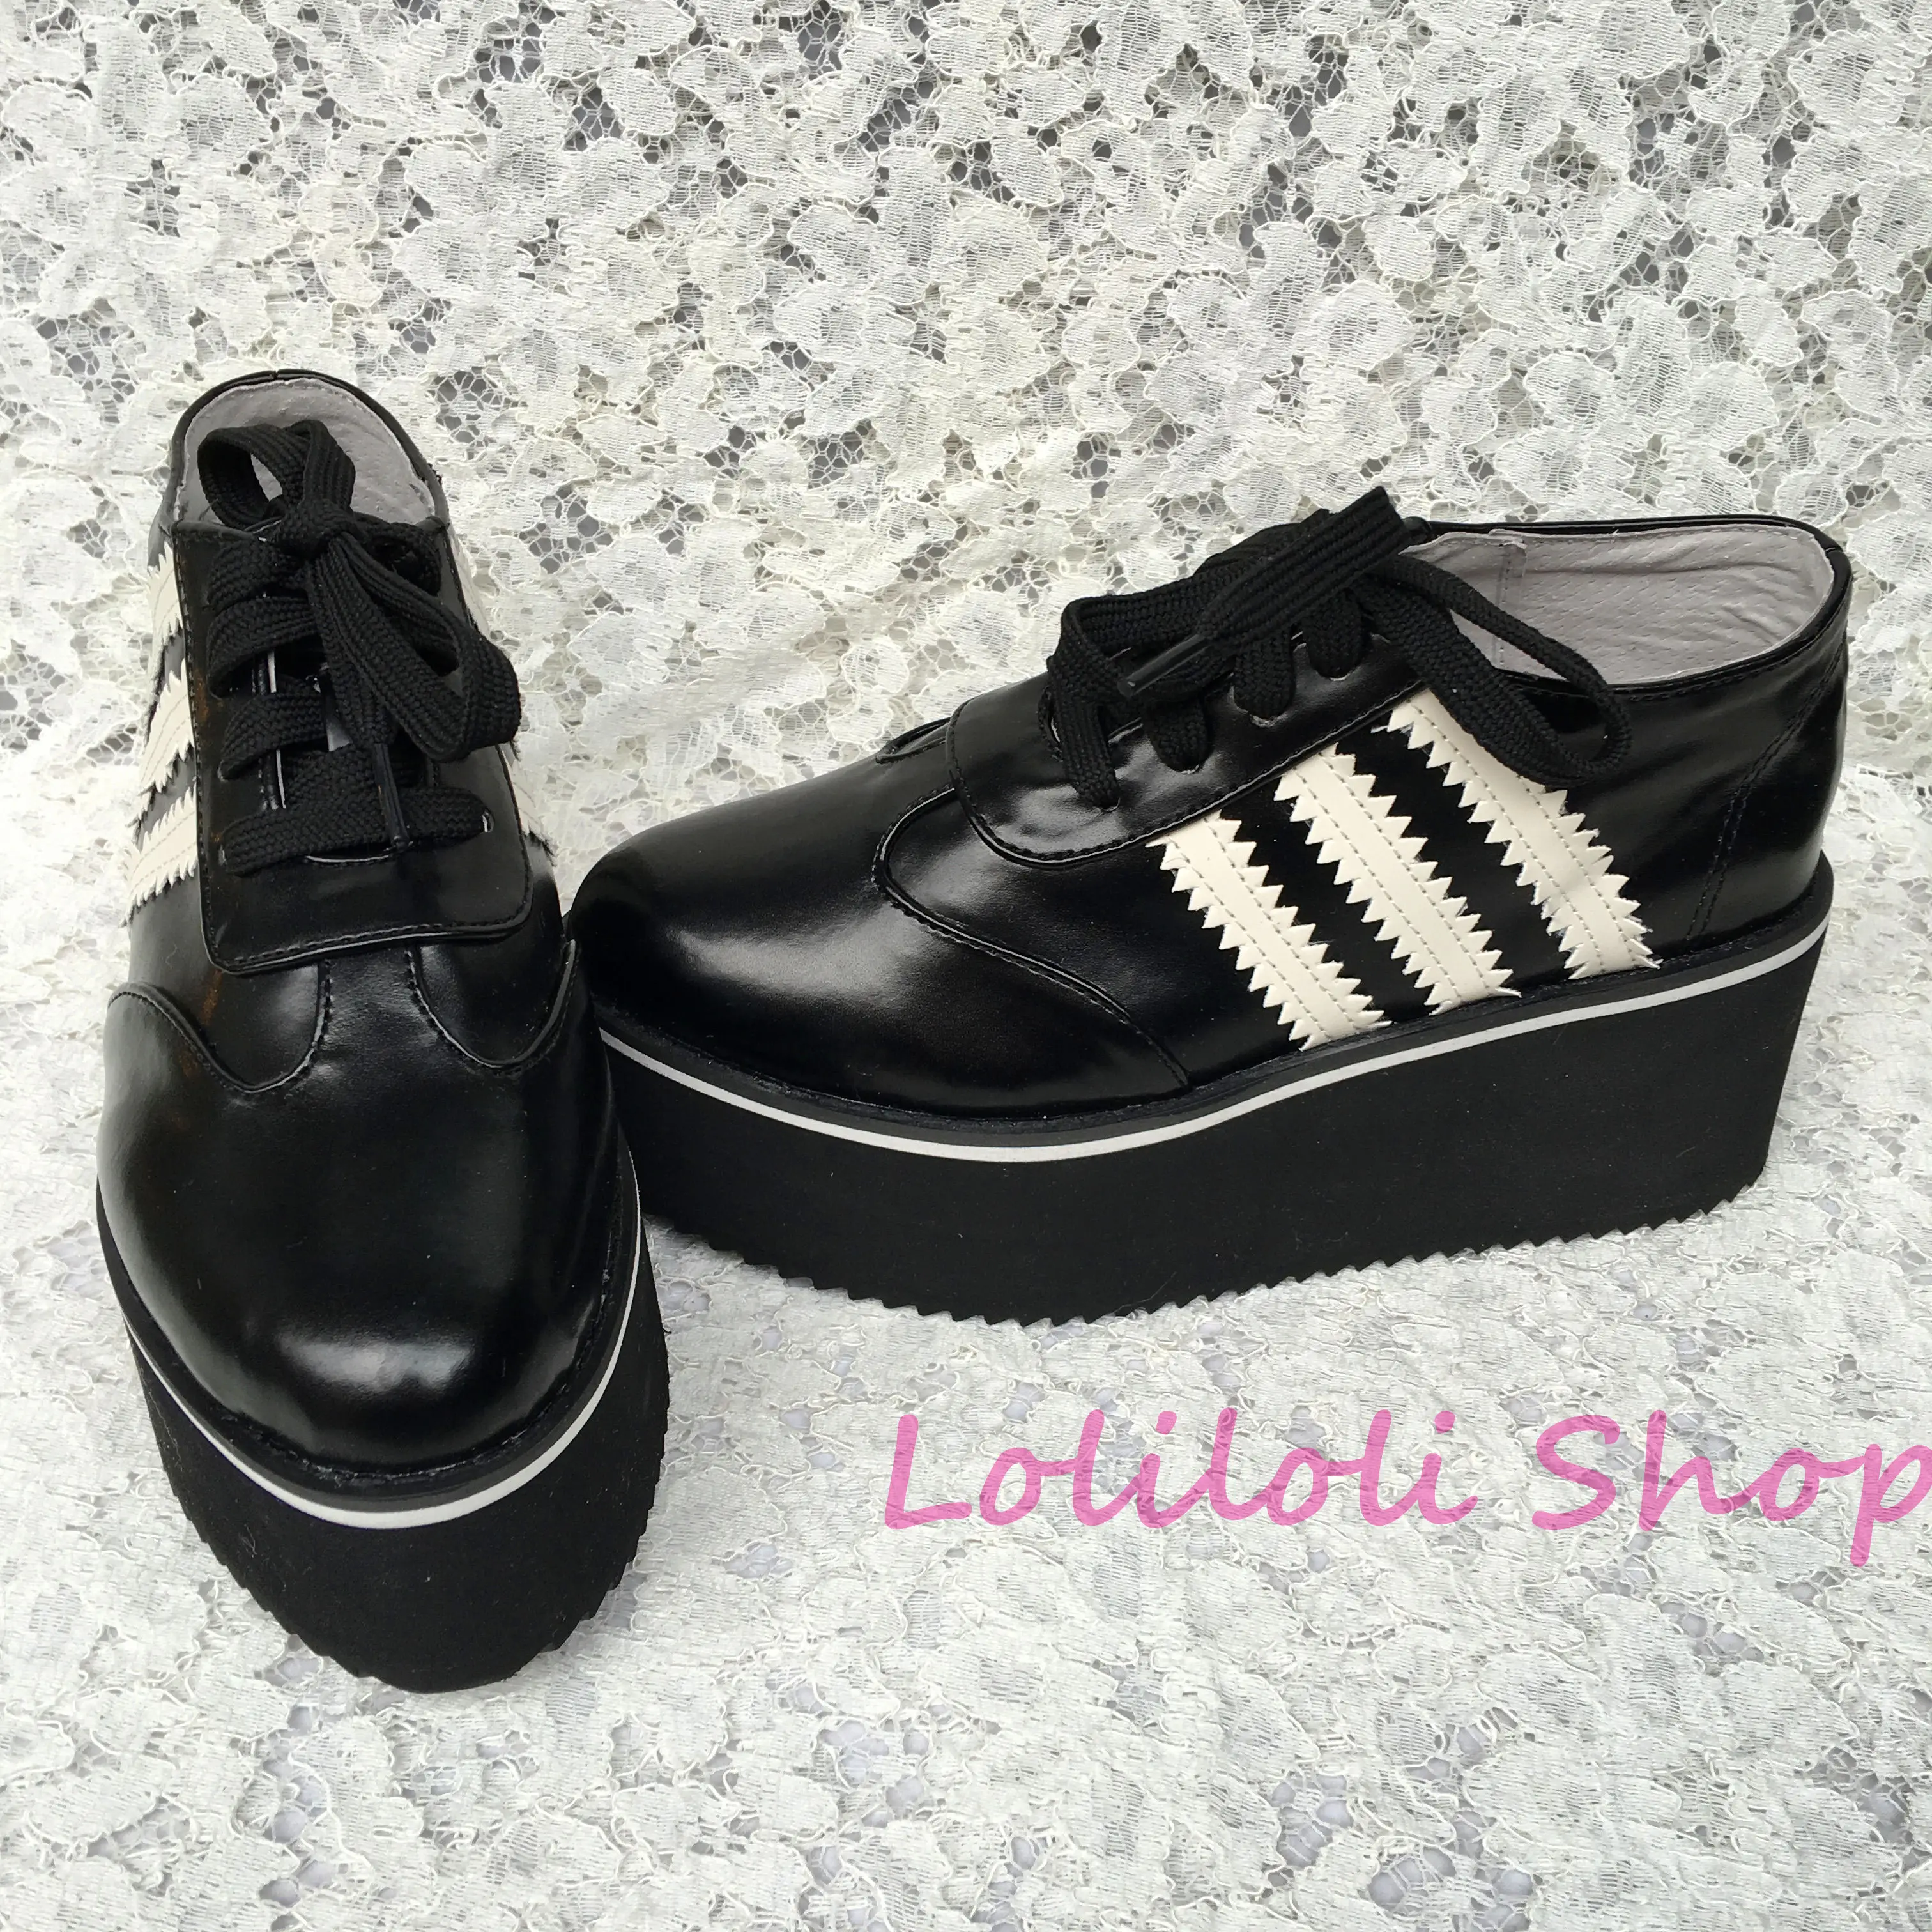 Princess lolita shoes Lolilloliyoyo antaina Japanese design thick bottom black bright skin flat shoes with white gingham 5135s